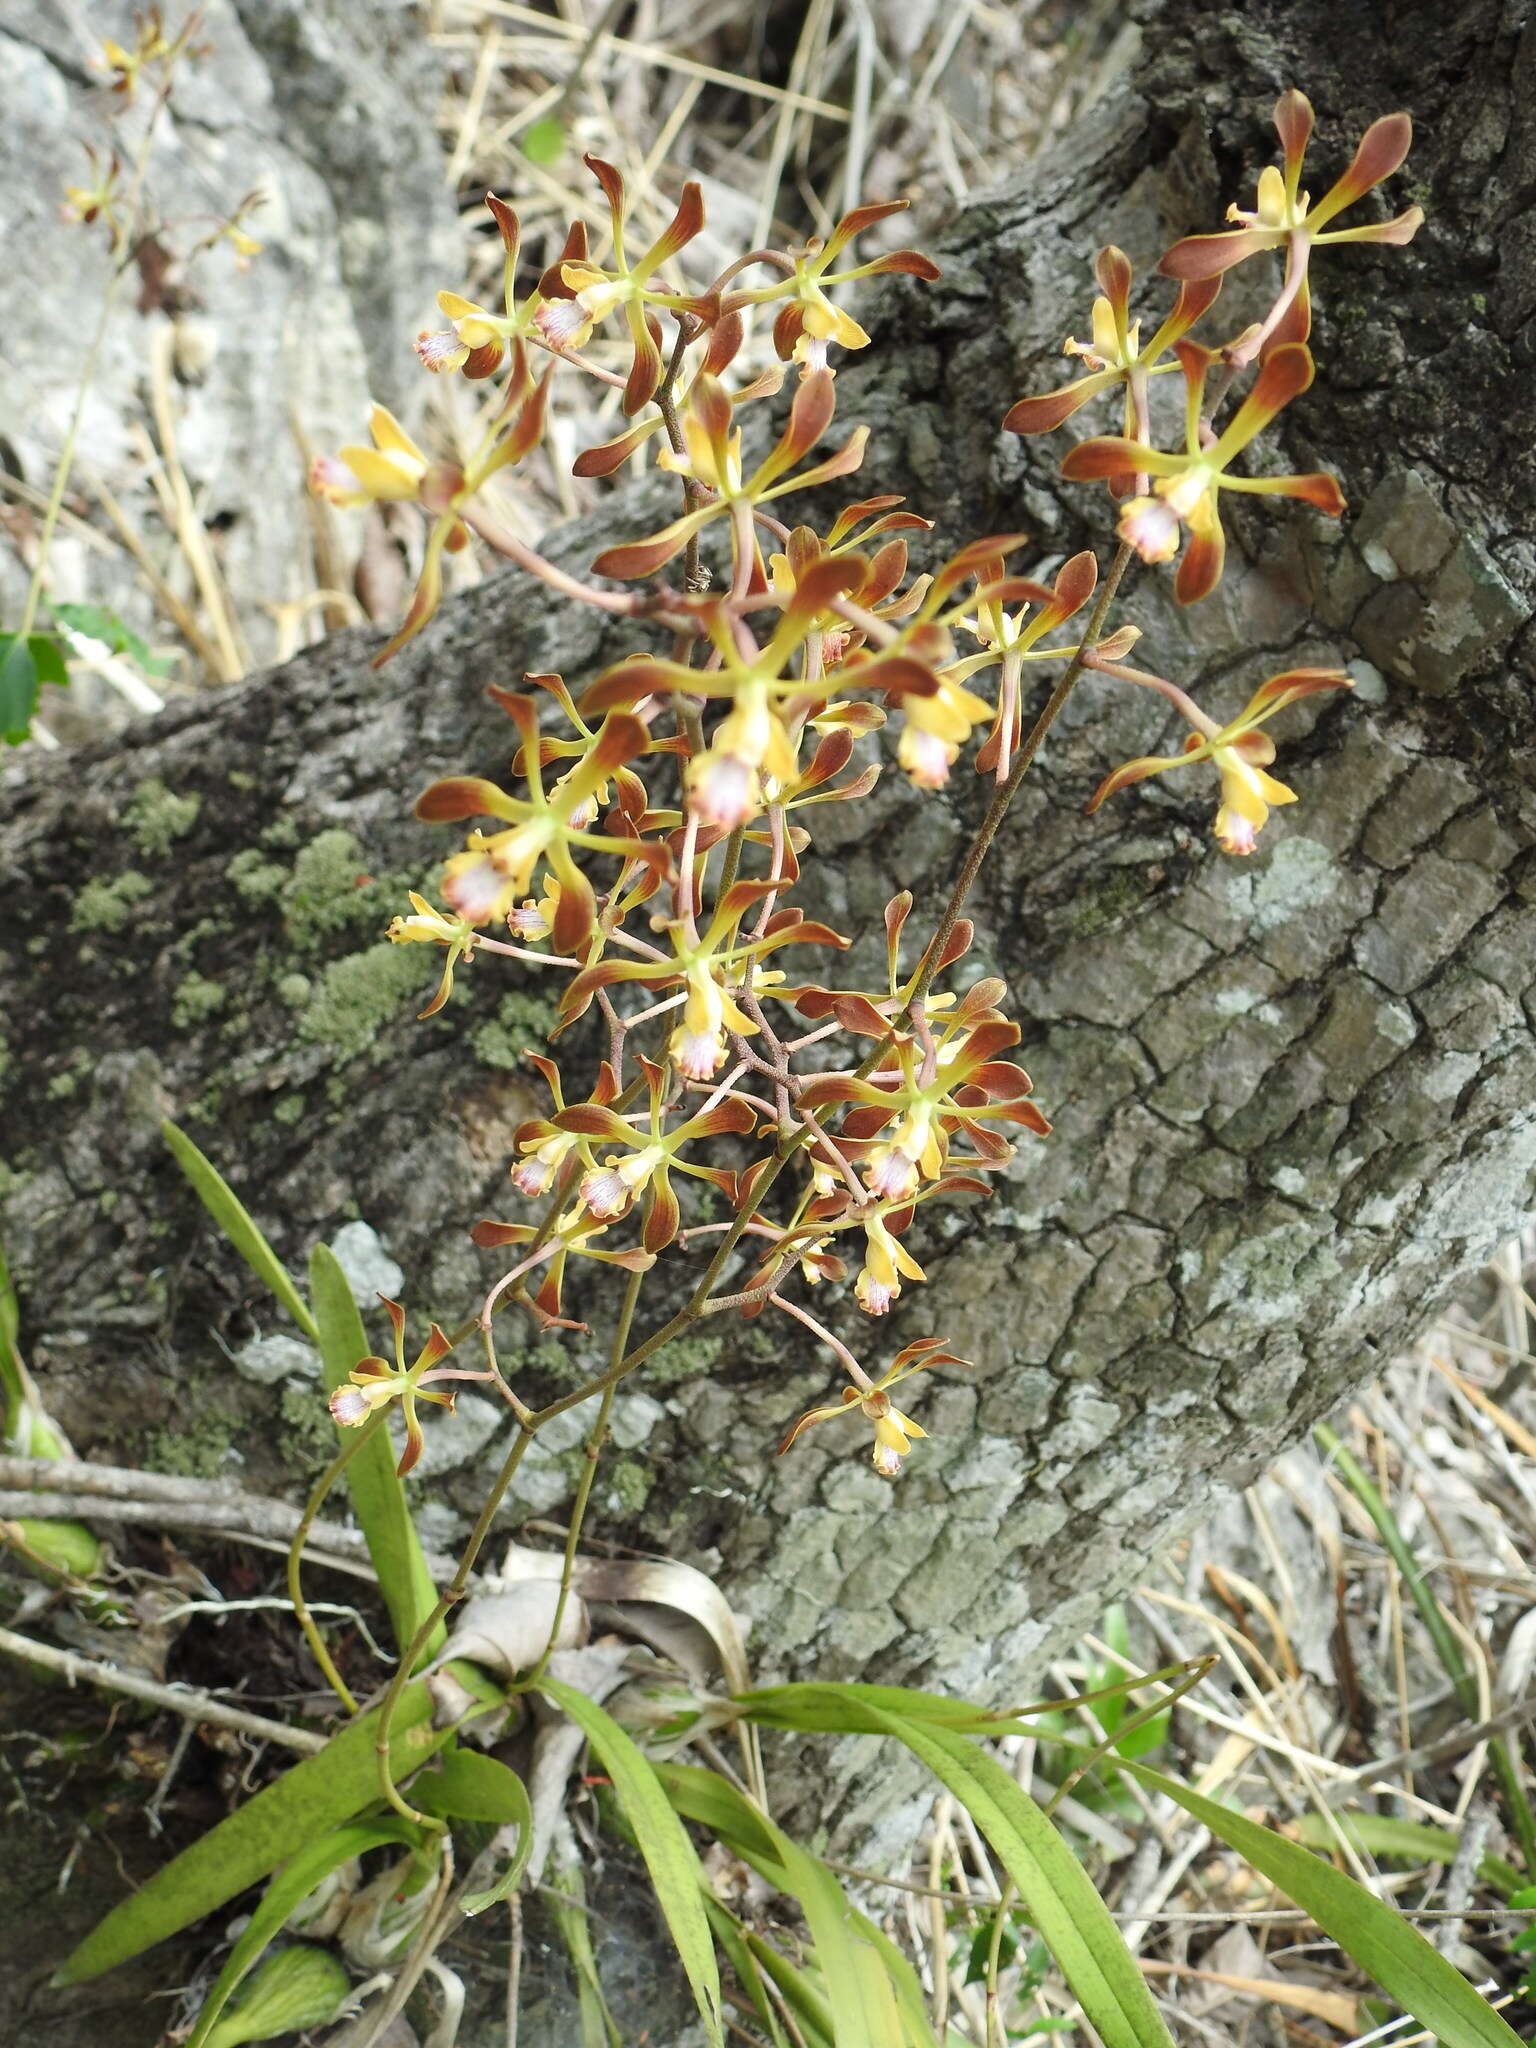 Image of Encyclia alata subsp. parviflora (Regel) Dressler & G. E. Pollard